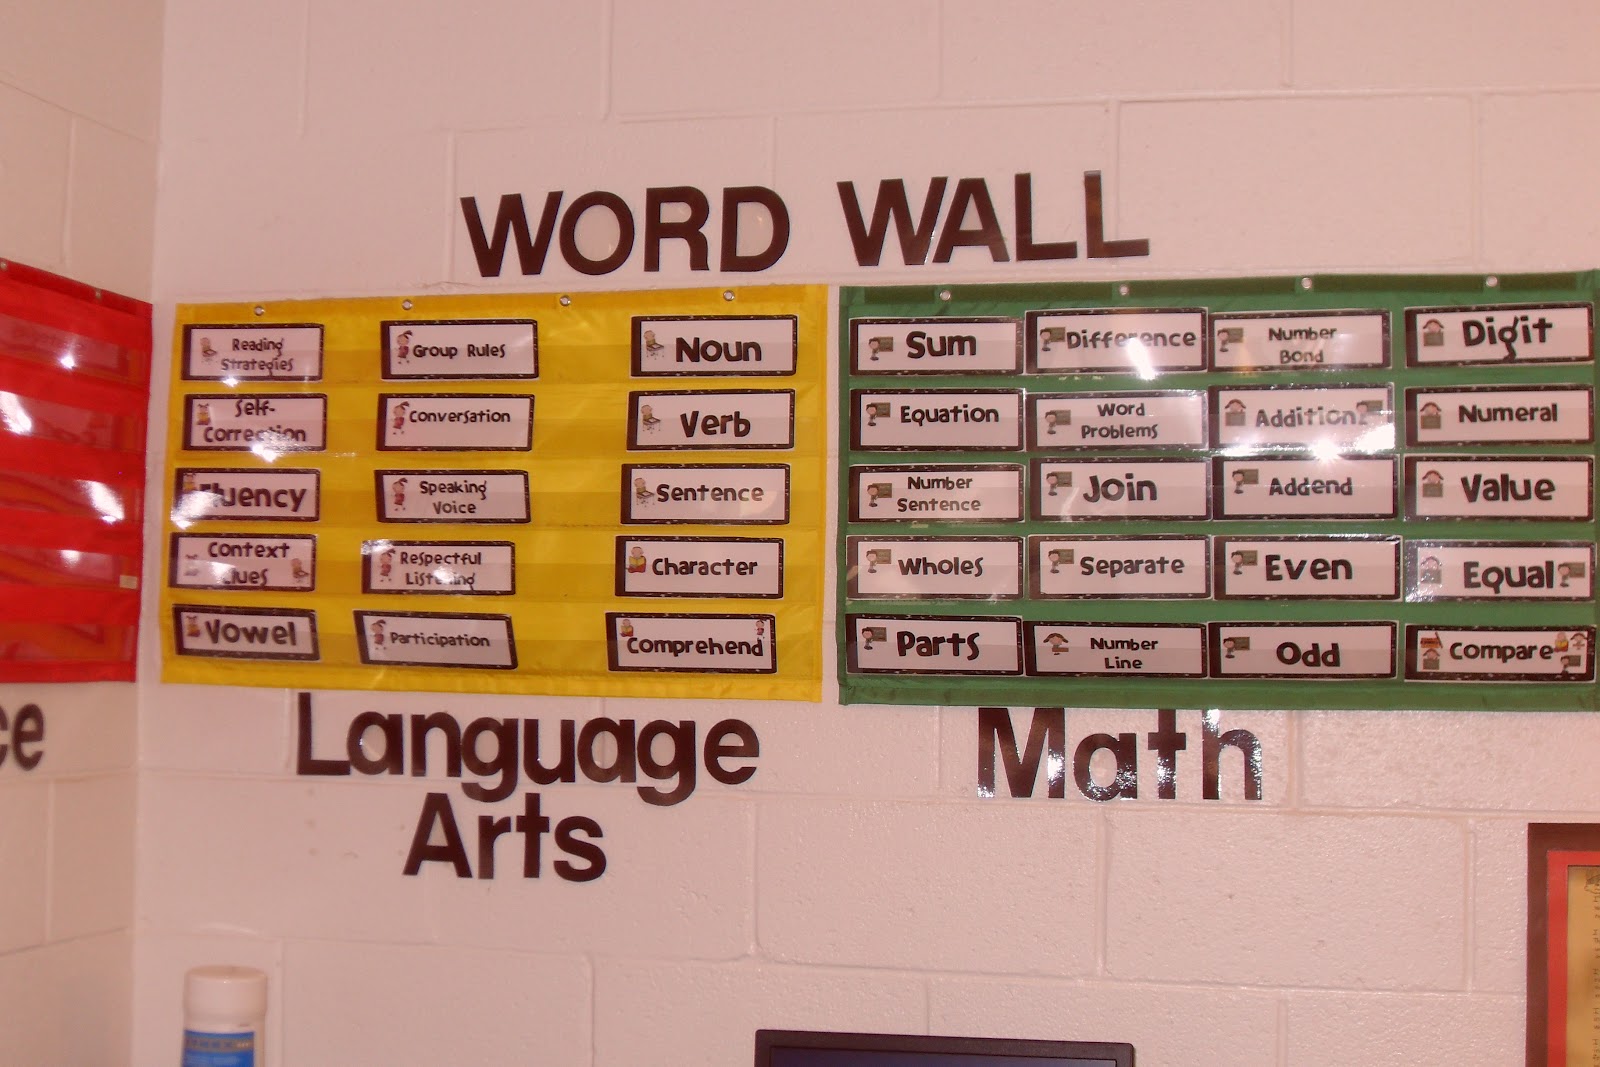 Wordwall test. Word Wall. Classrooms Wordwall. Wordwall платформа. Time Wordwall.